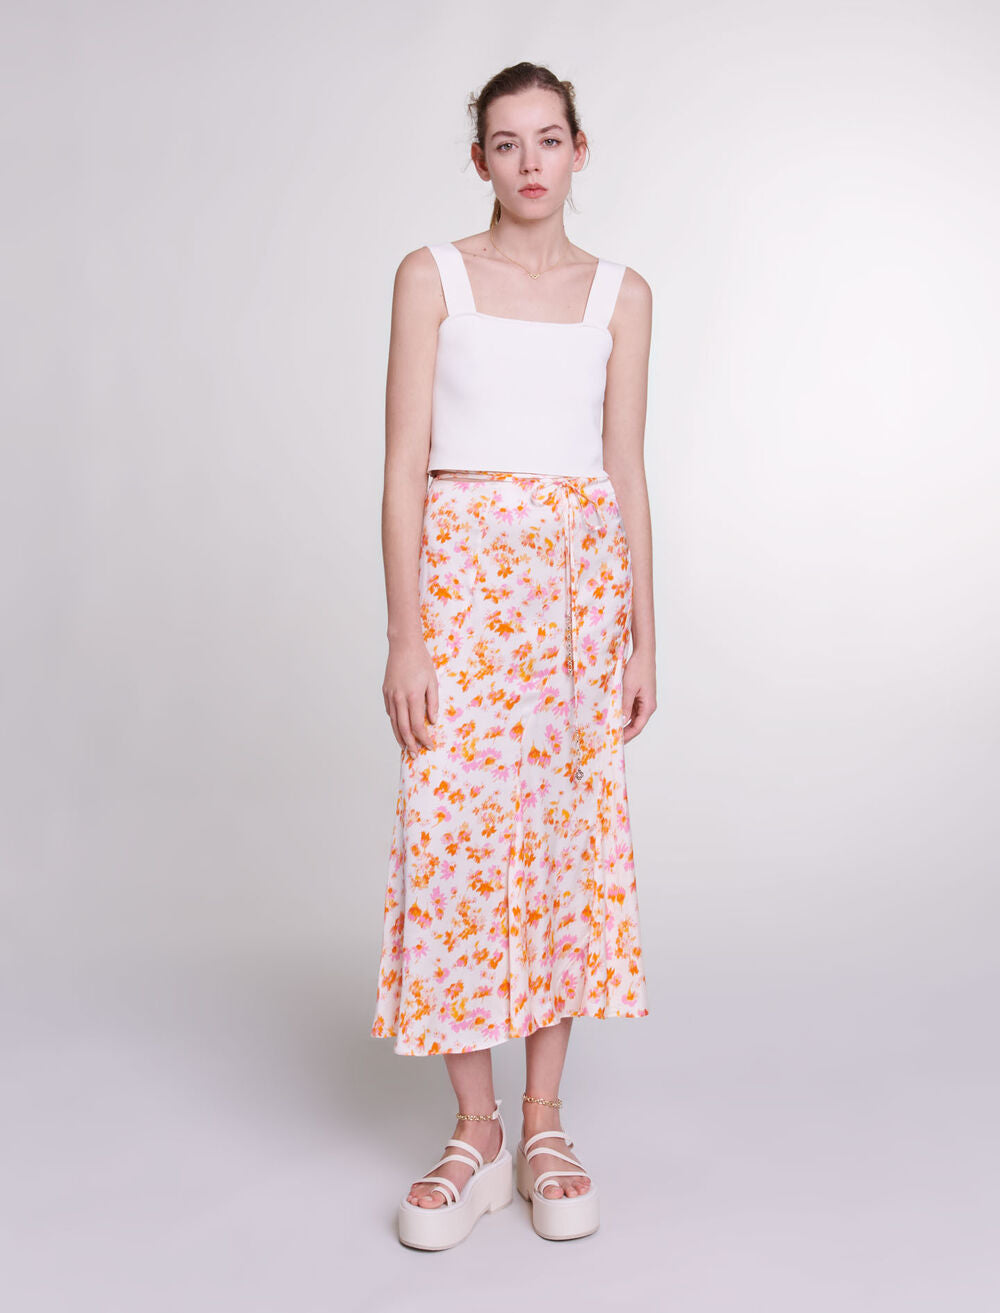 Sping Orange Flower Print-featured-Satin-effect floral skirt